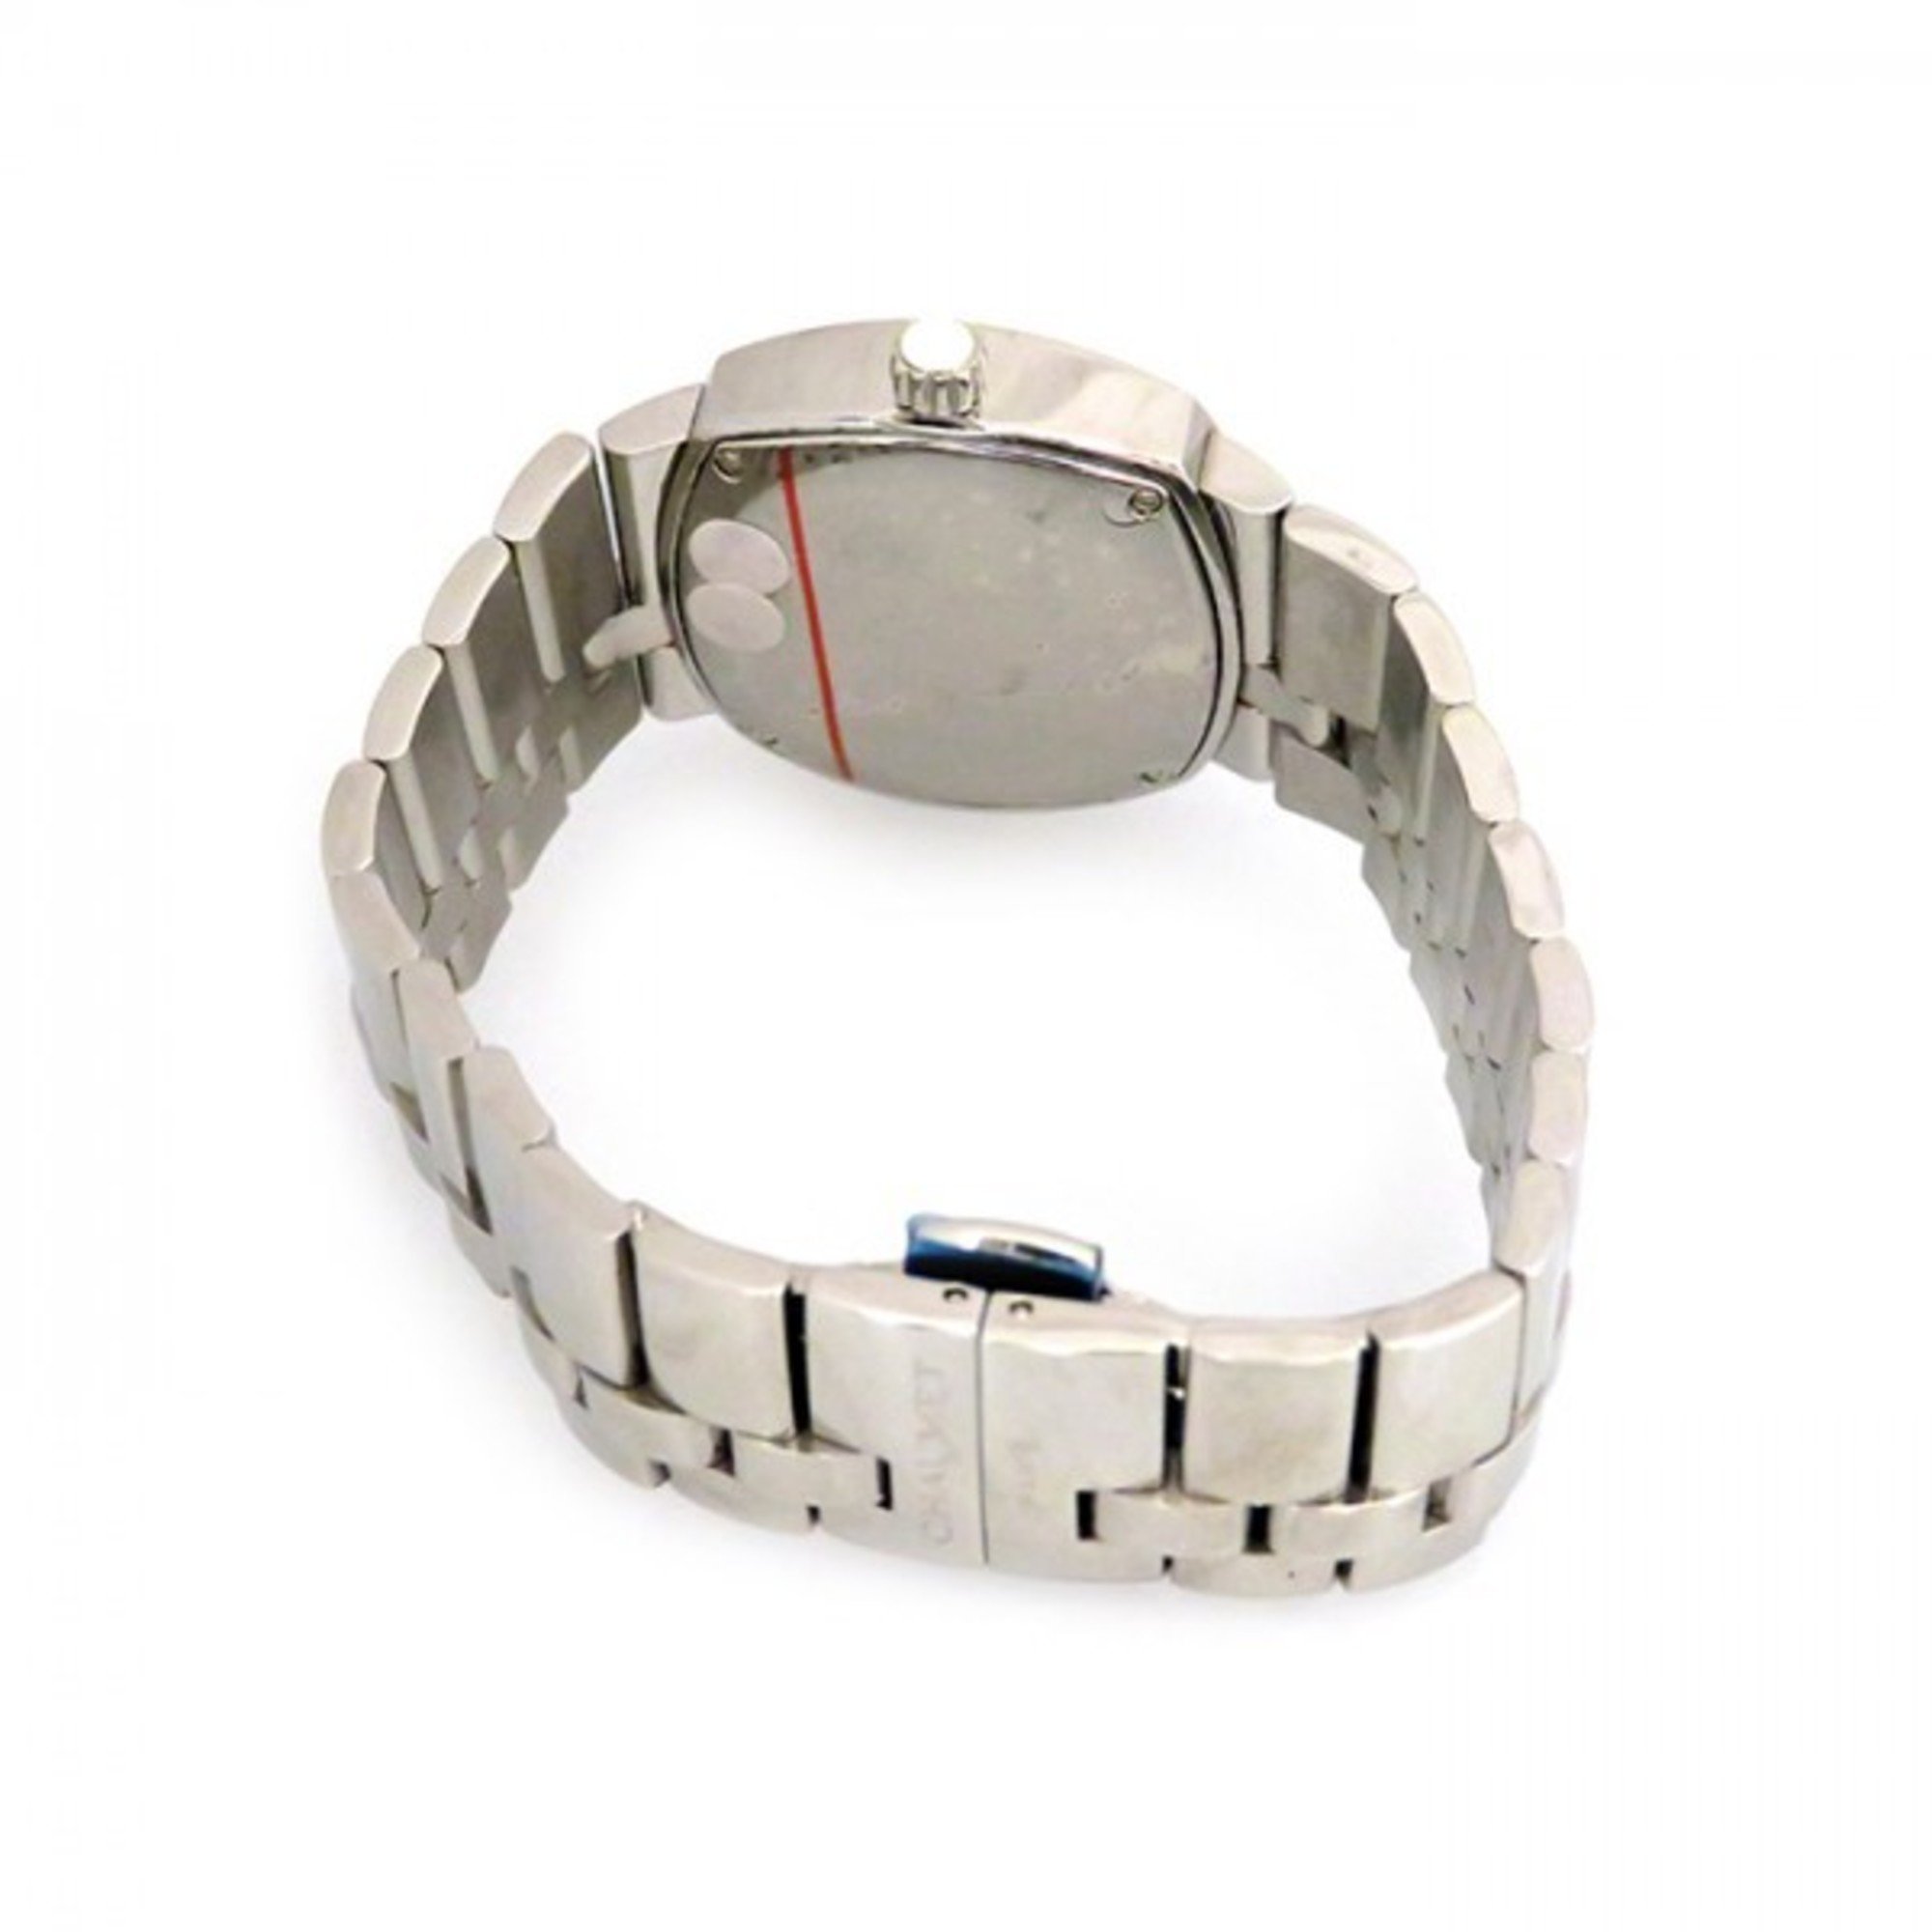 Chaumet CHAUMET Miss Dandy W1166029K silver dial watch ladies